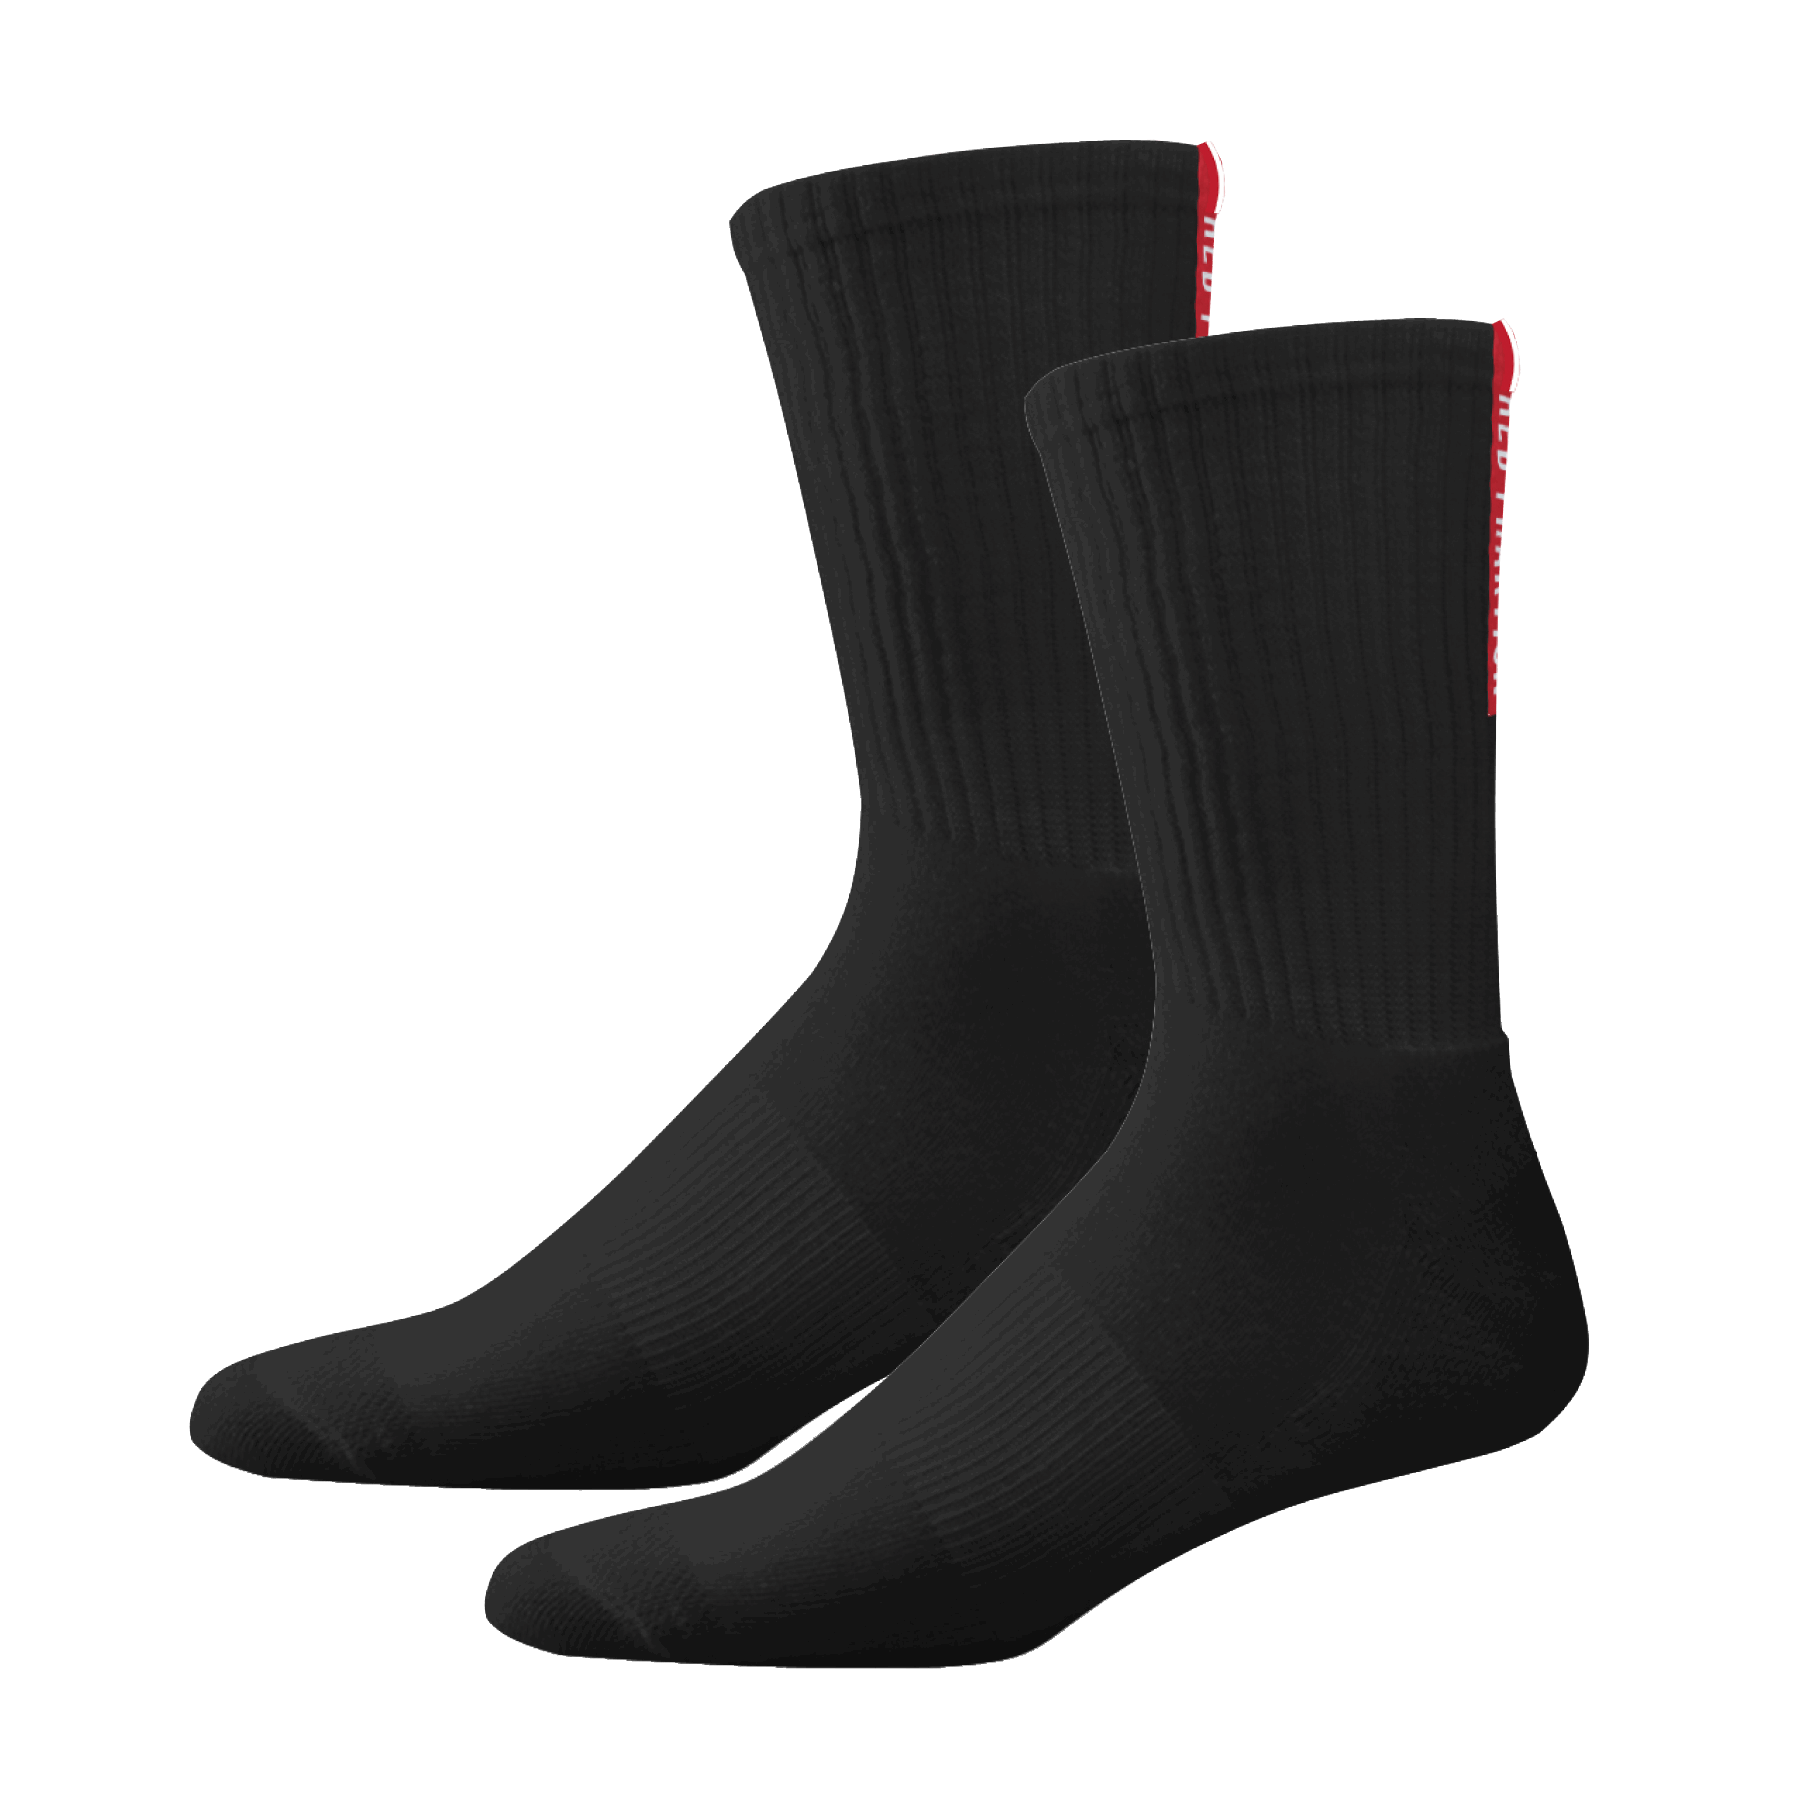 Black RF socks